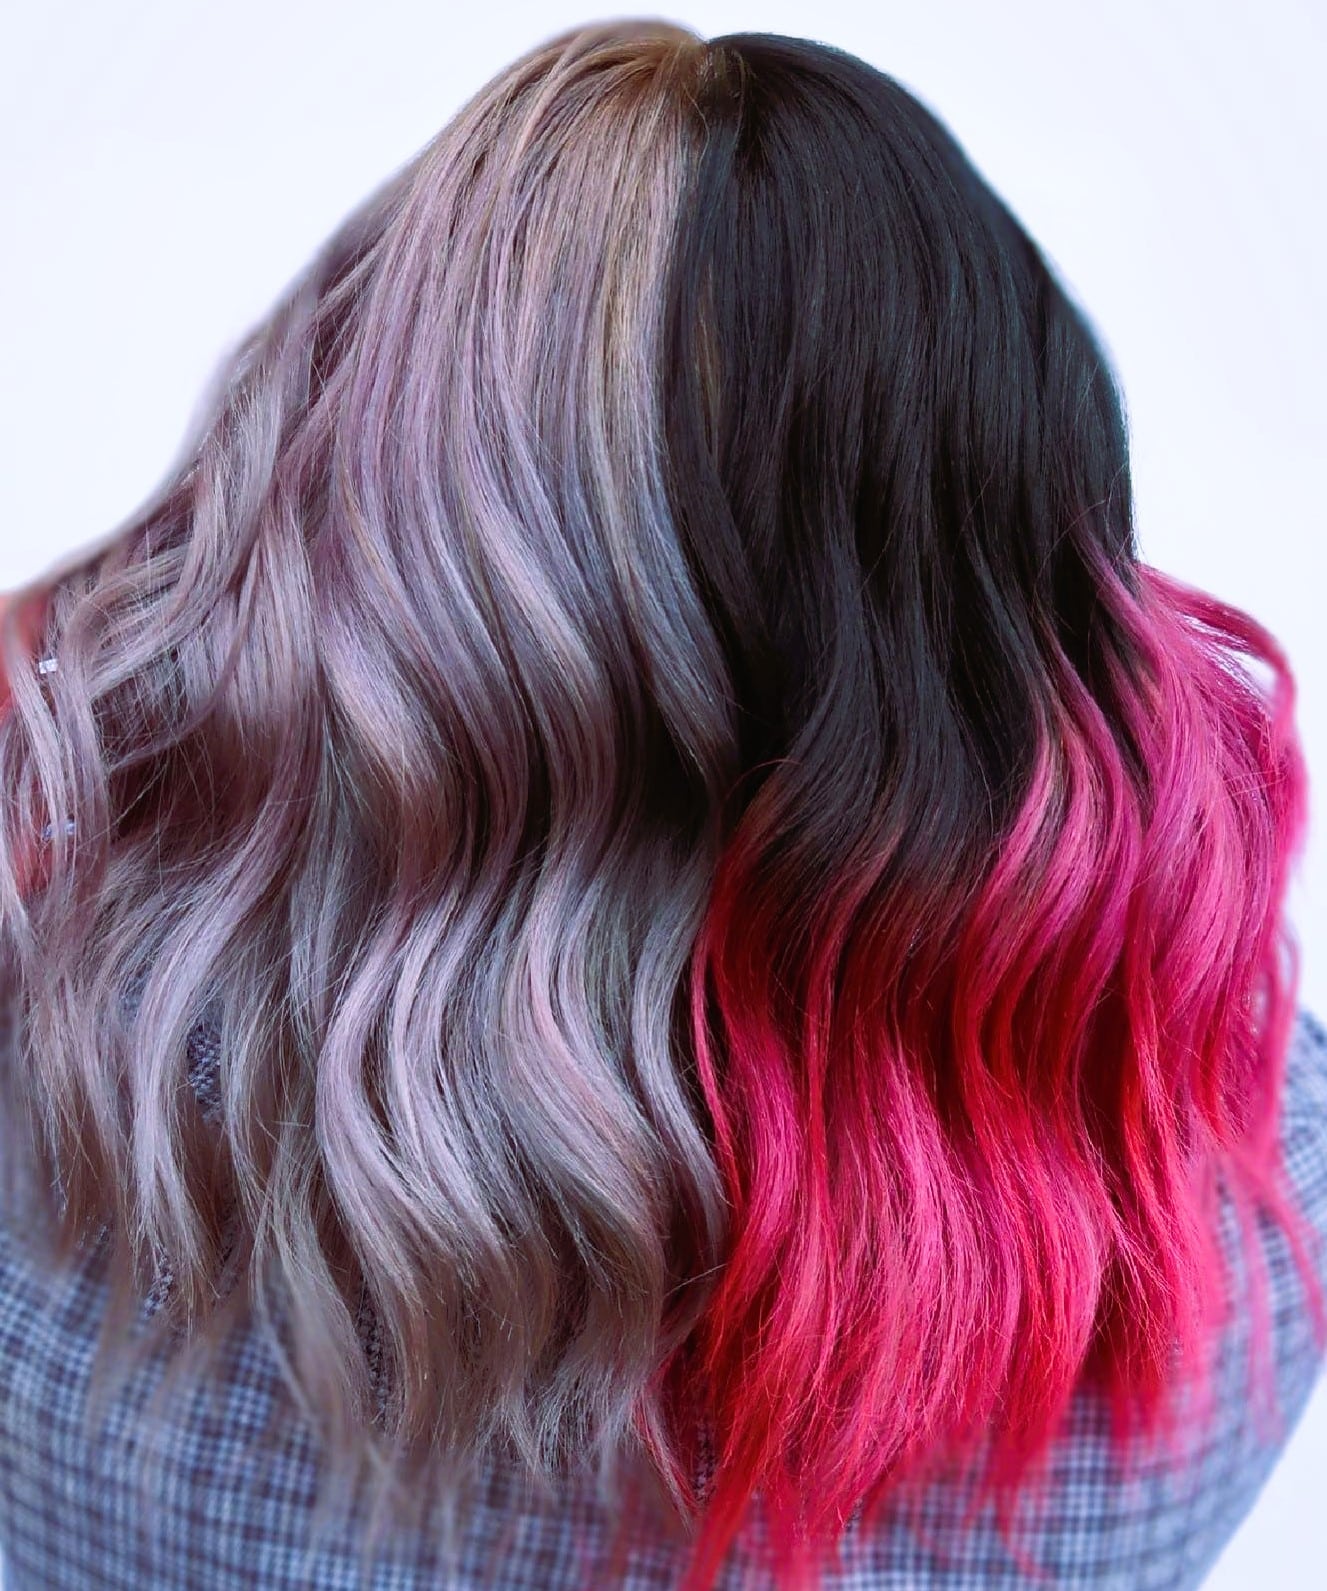 Black and Pink Hair Split